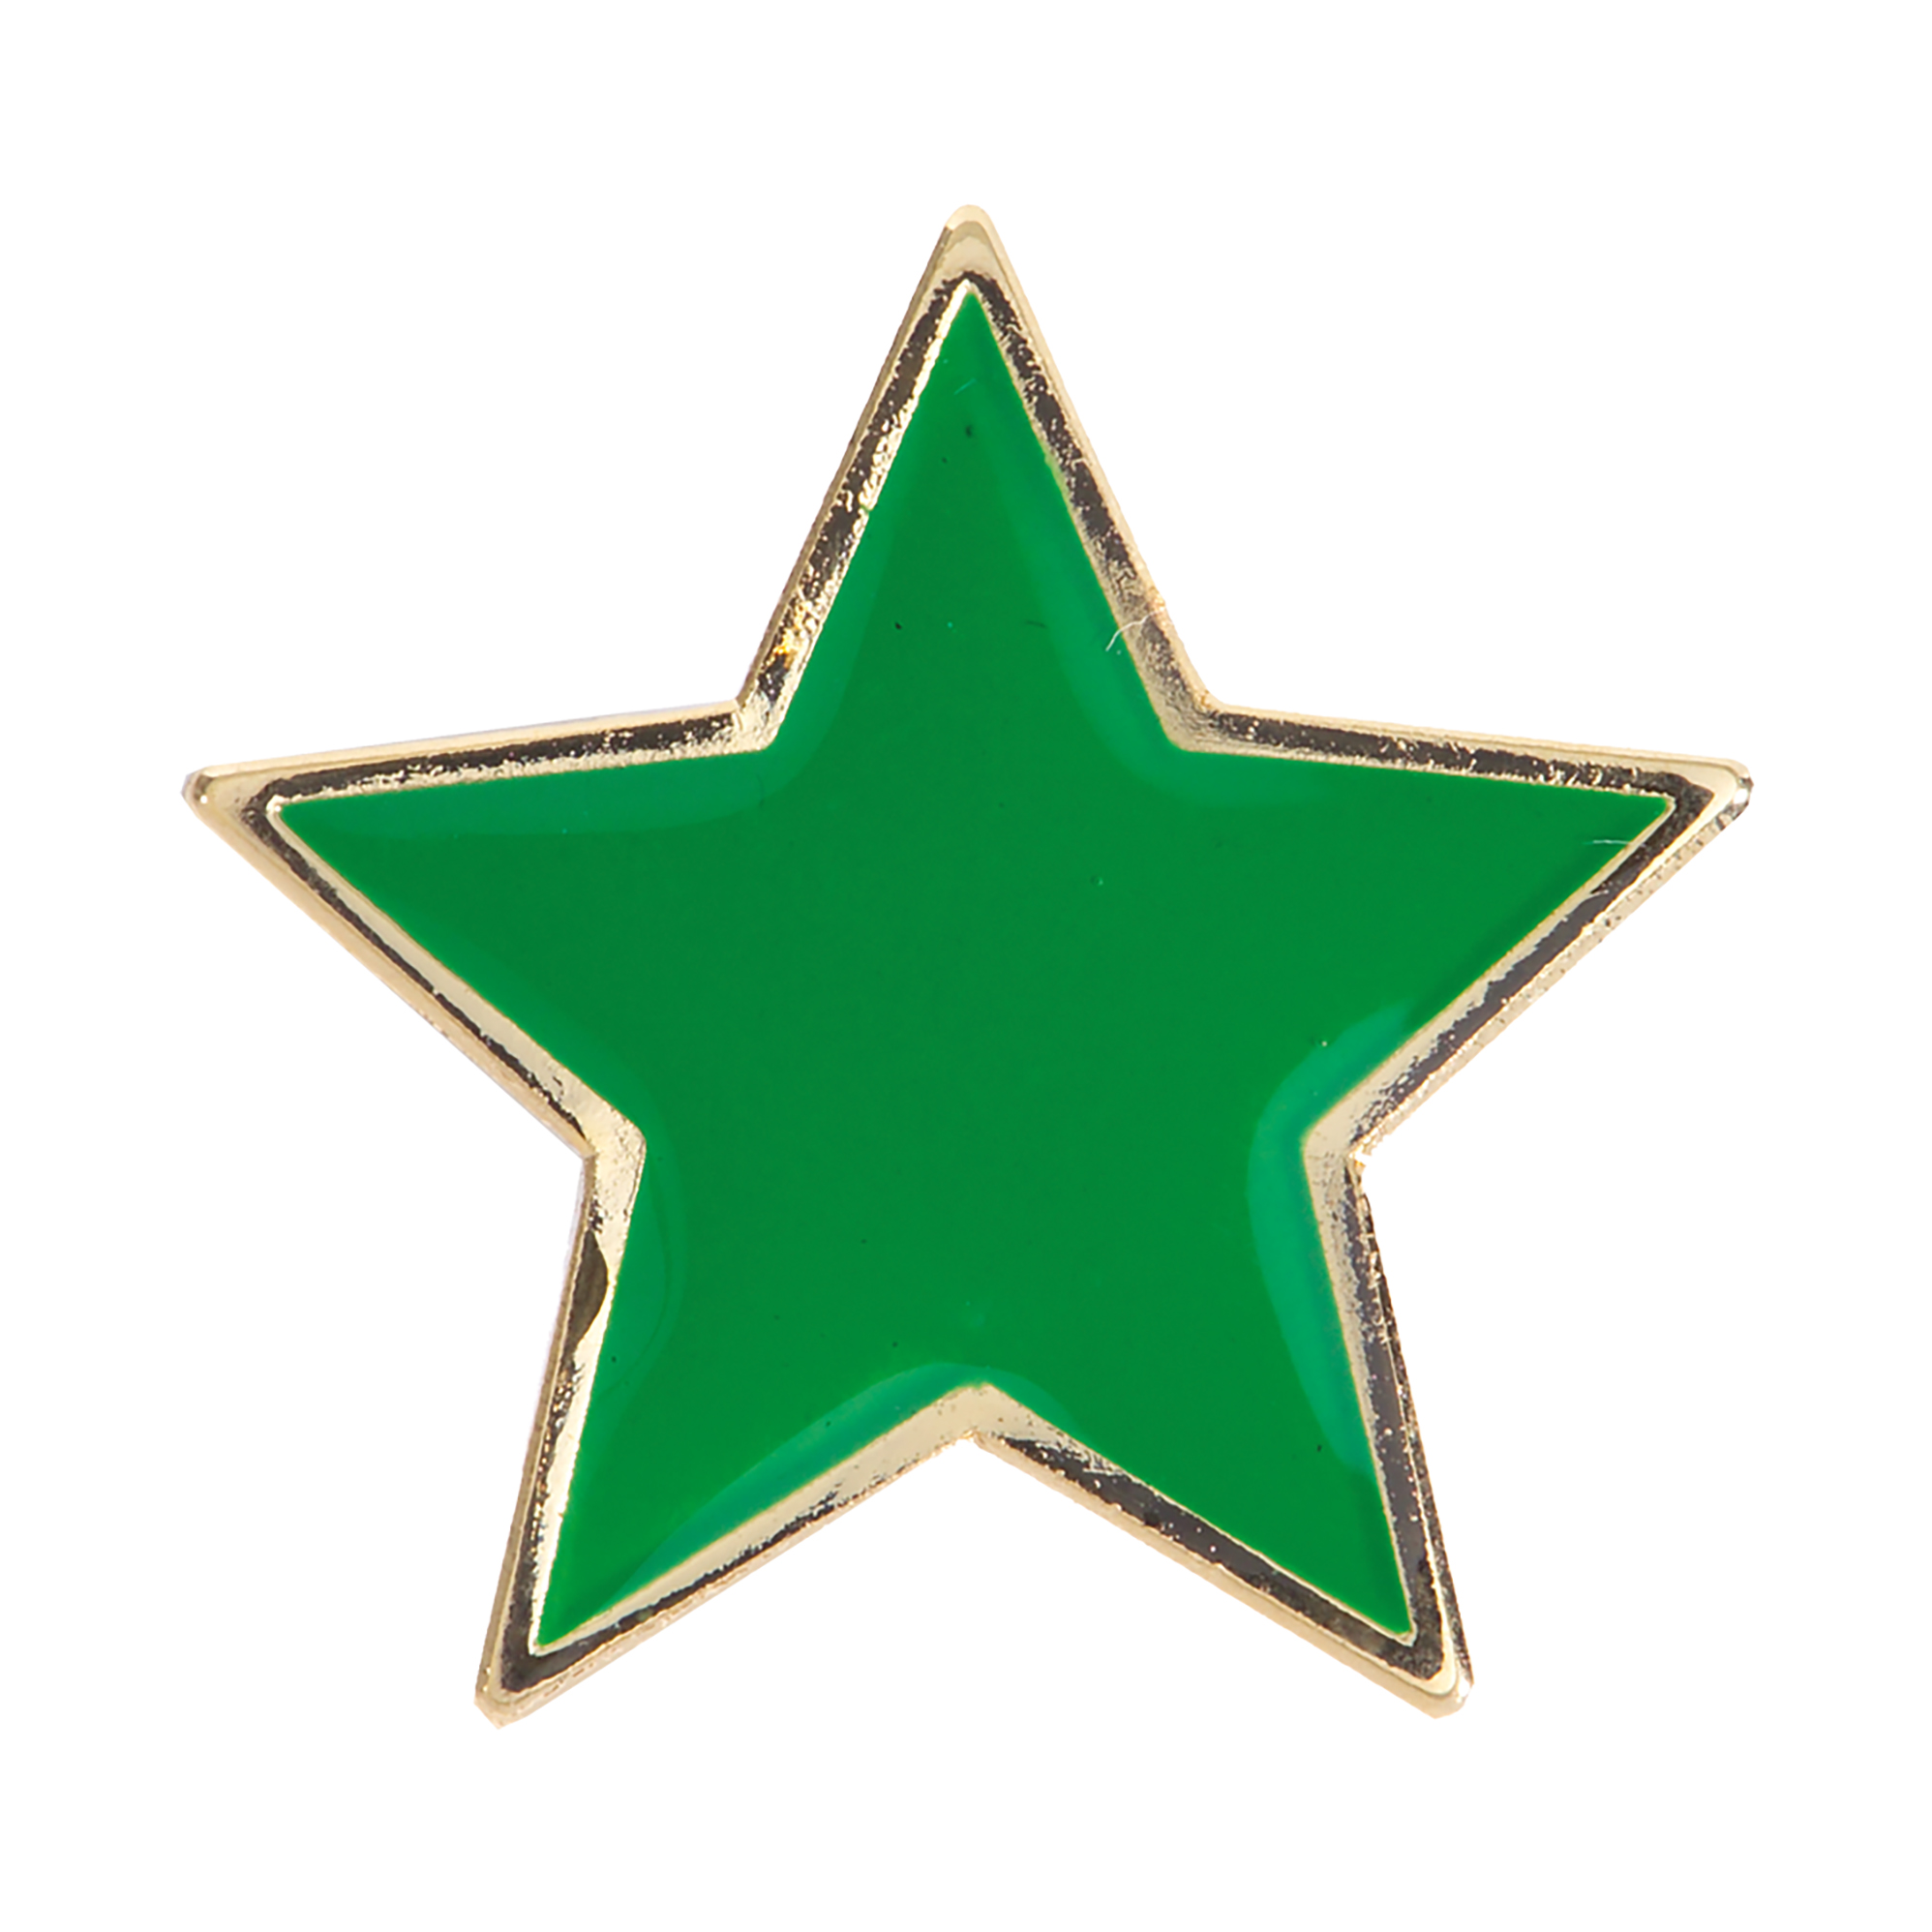 GREEN STAR ENAMEL BADGE